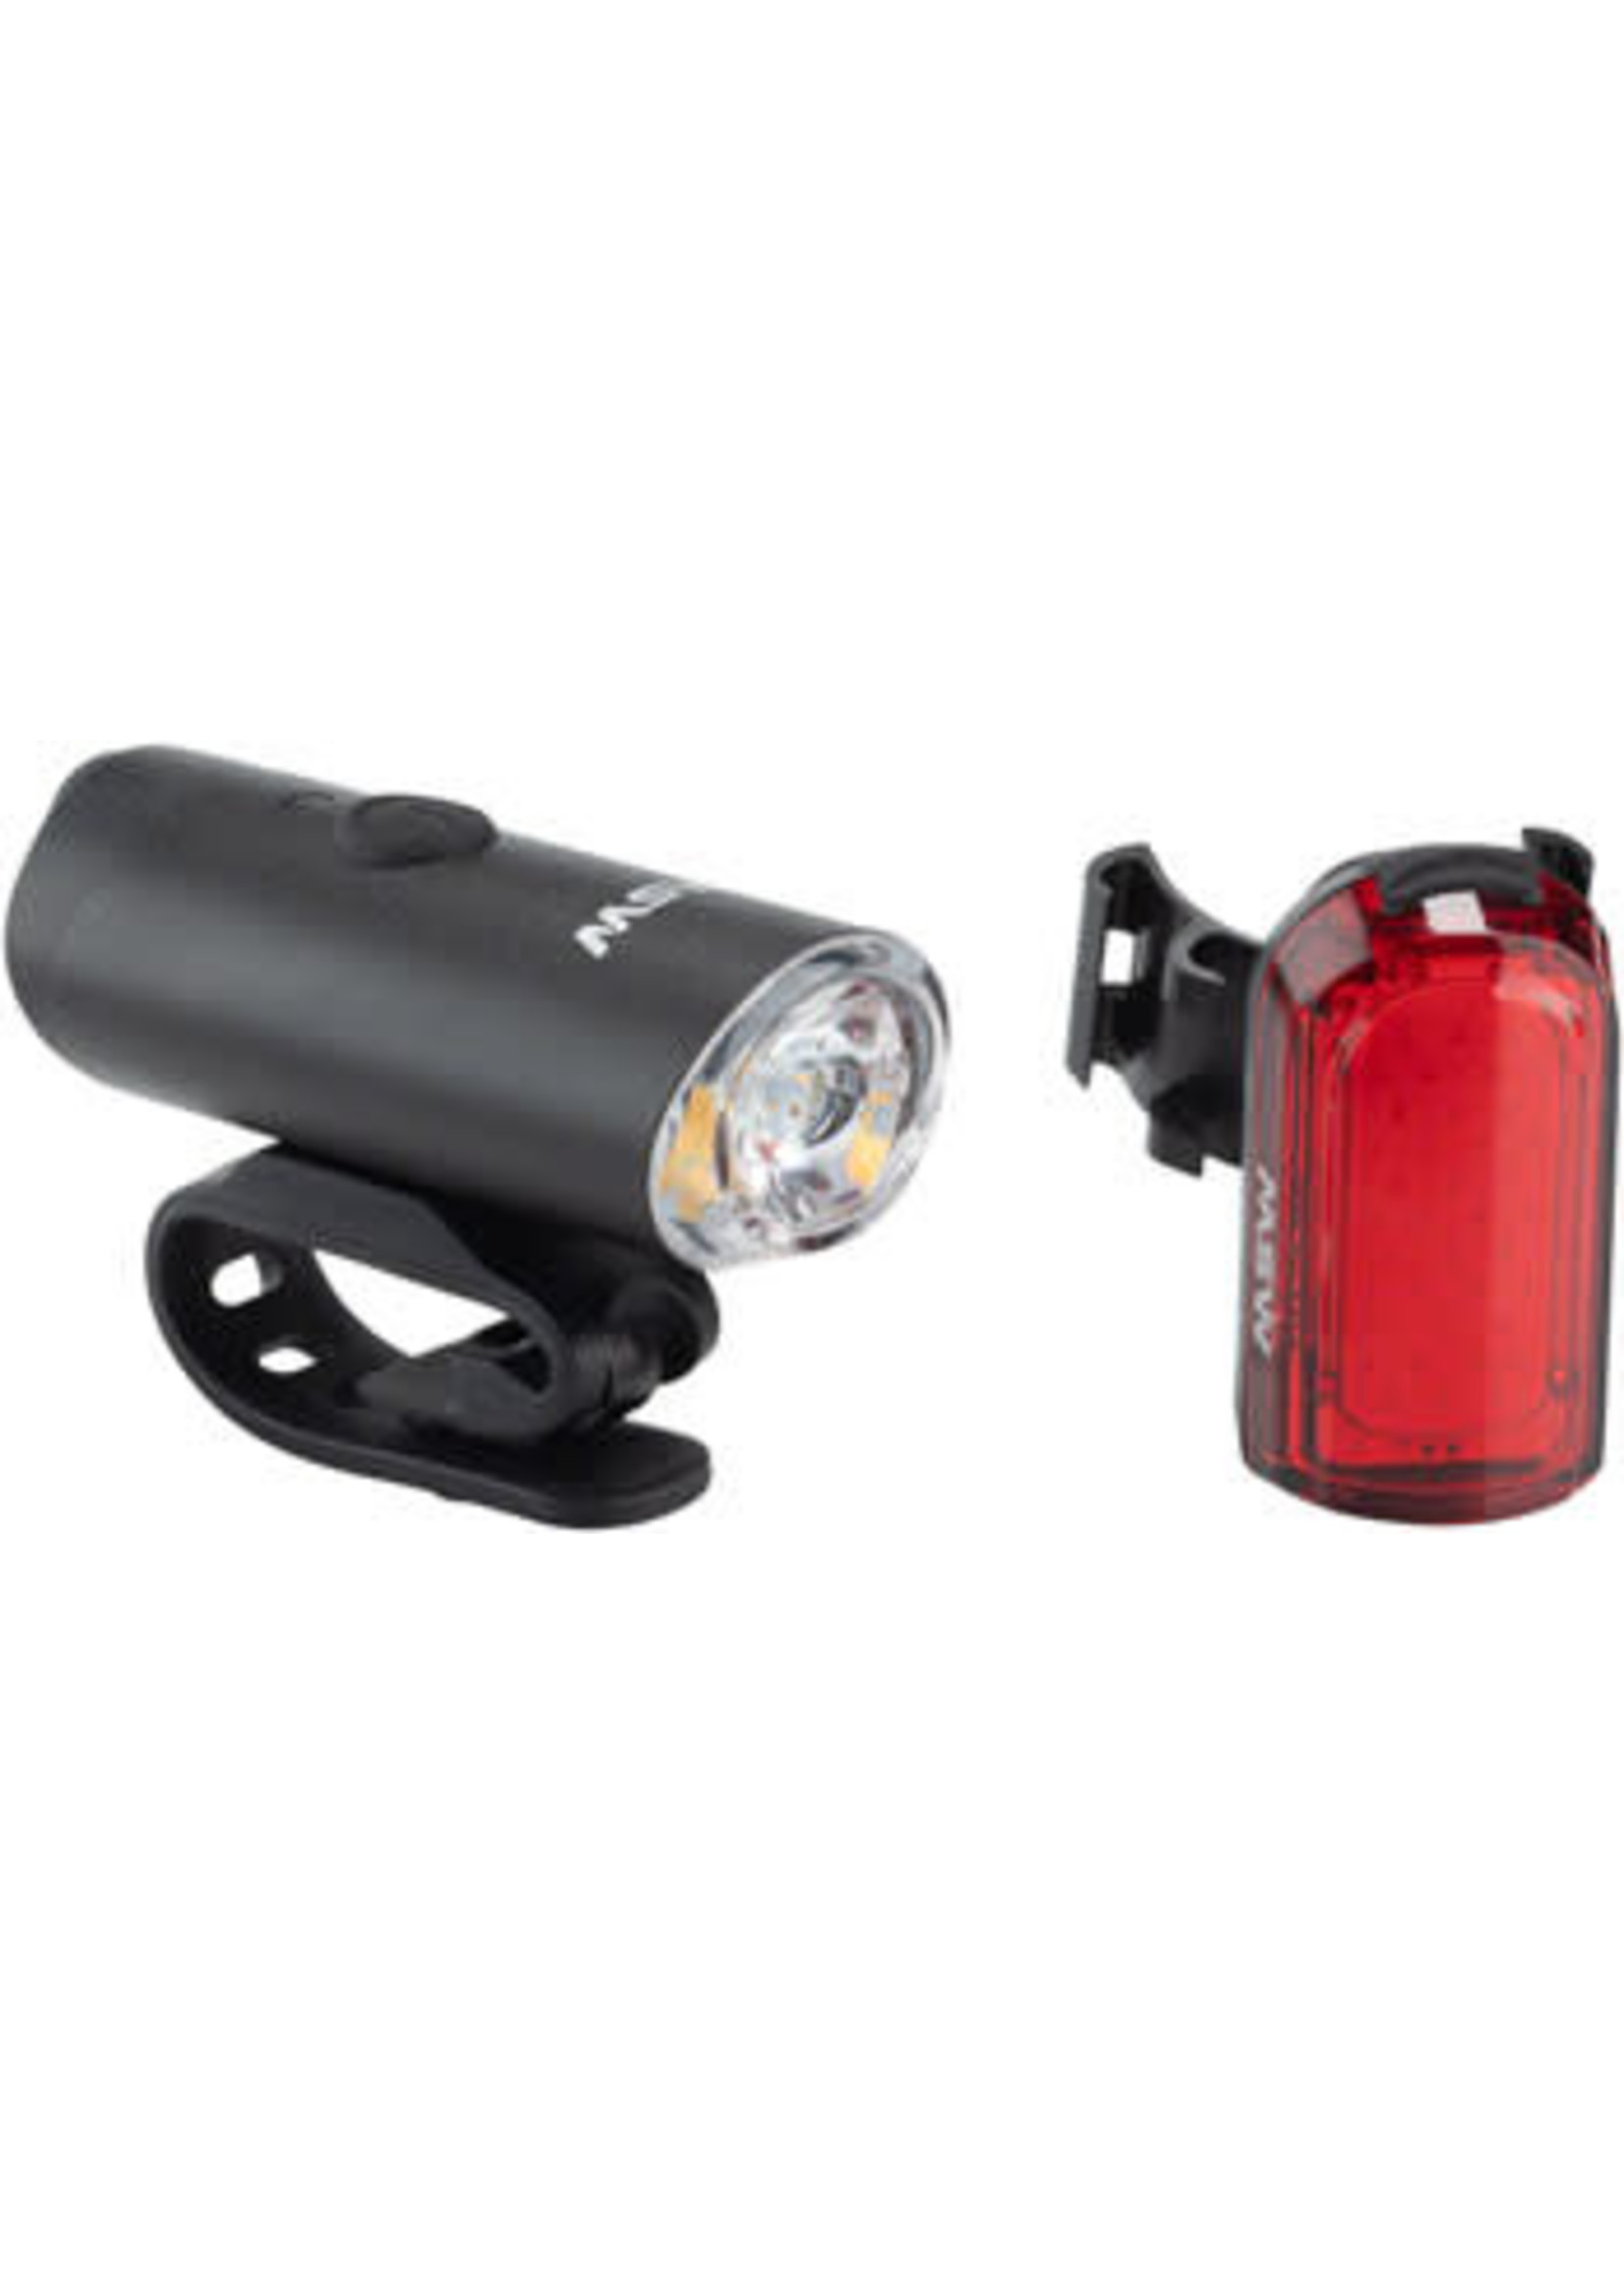 MSW MSW Tigermoth 500 USB Lightset, 500 Lumen Headlight and 20 Lumen Taillight, Black